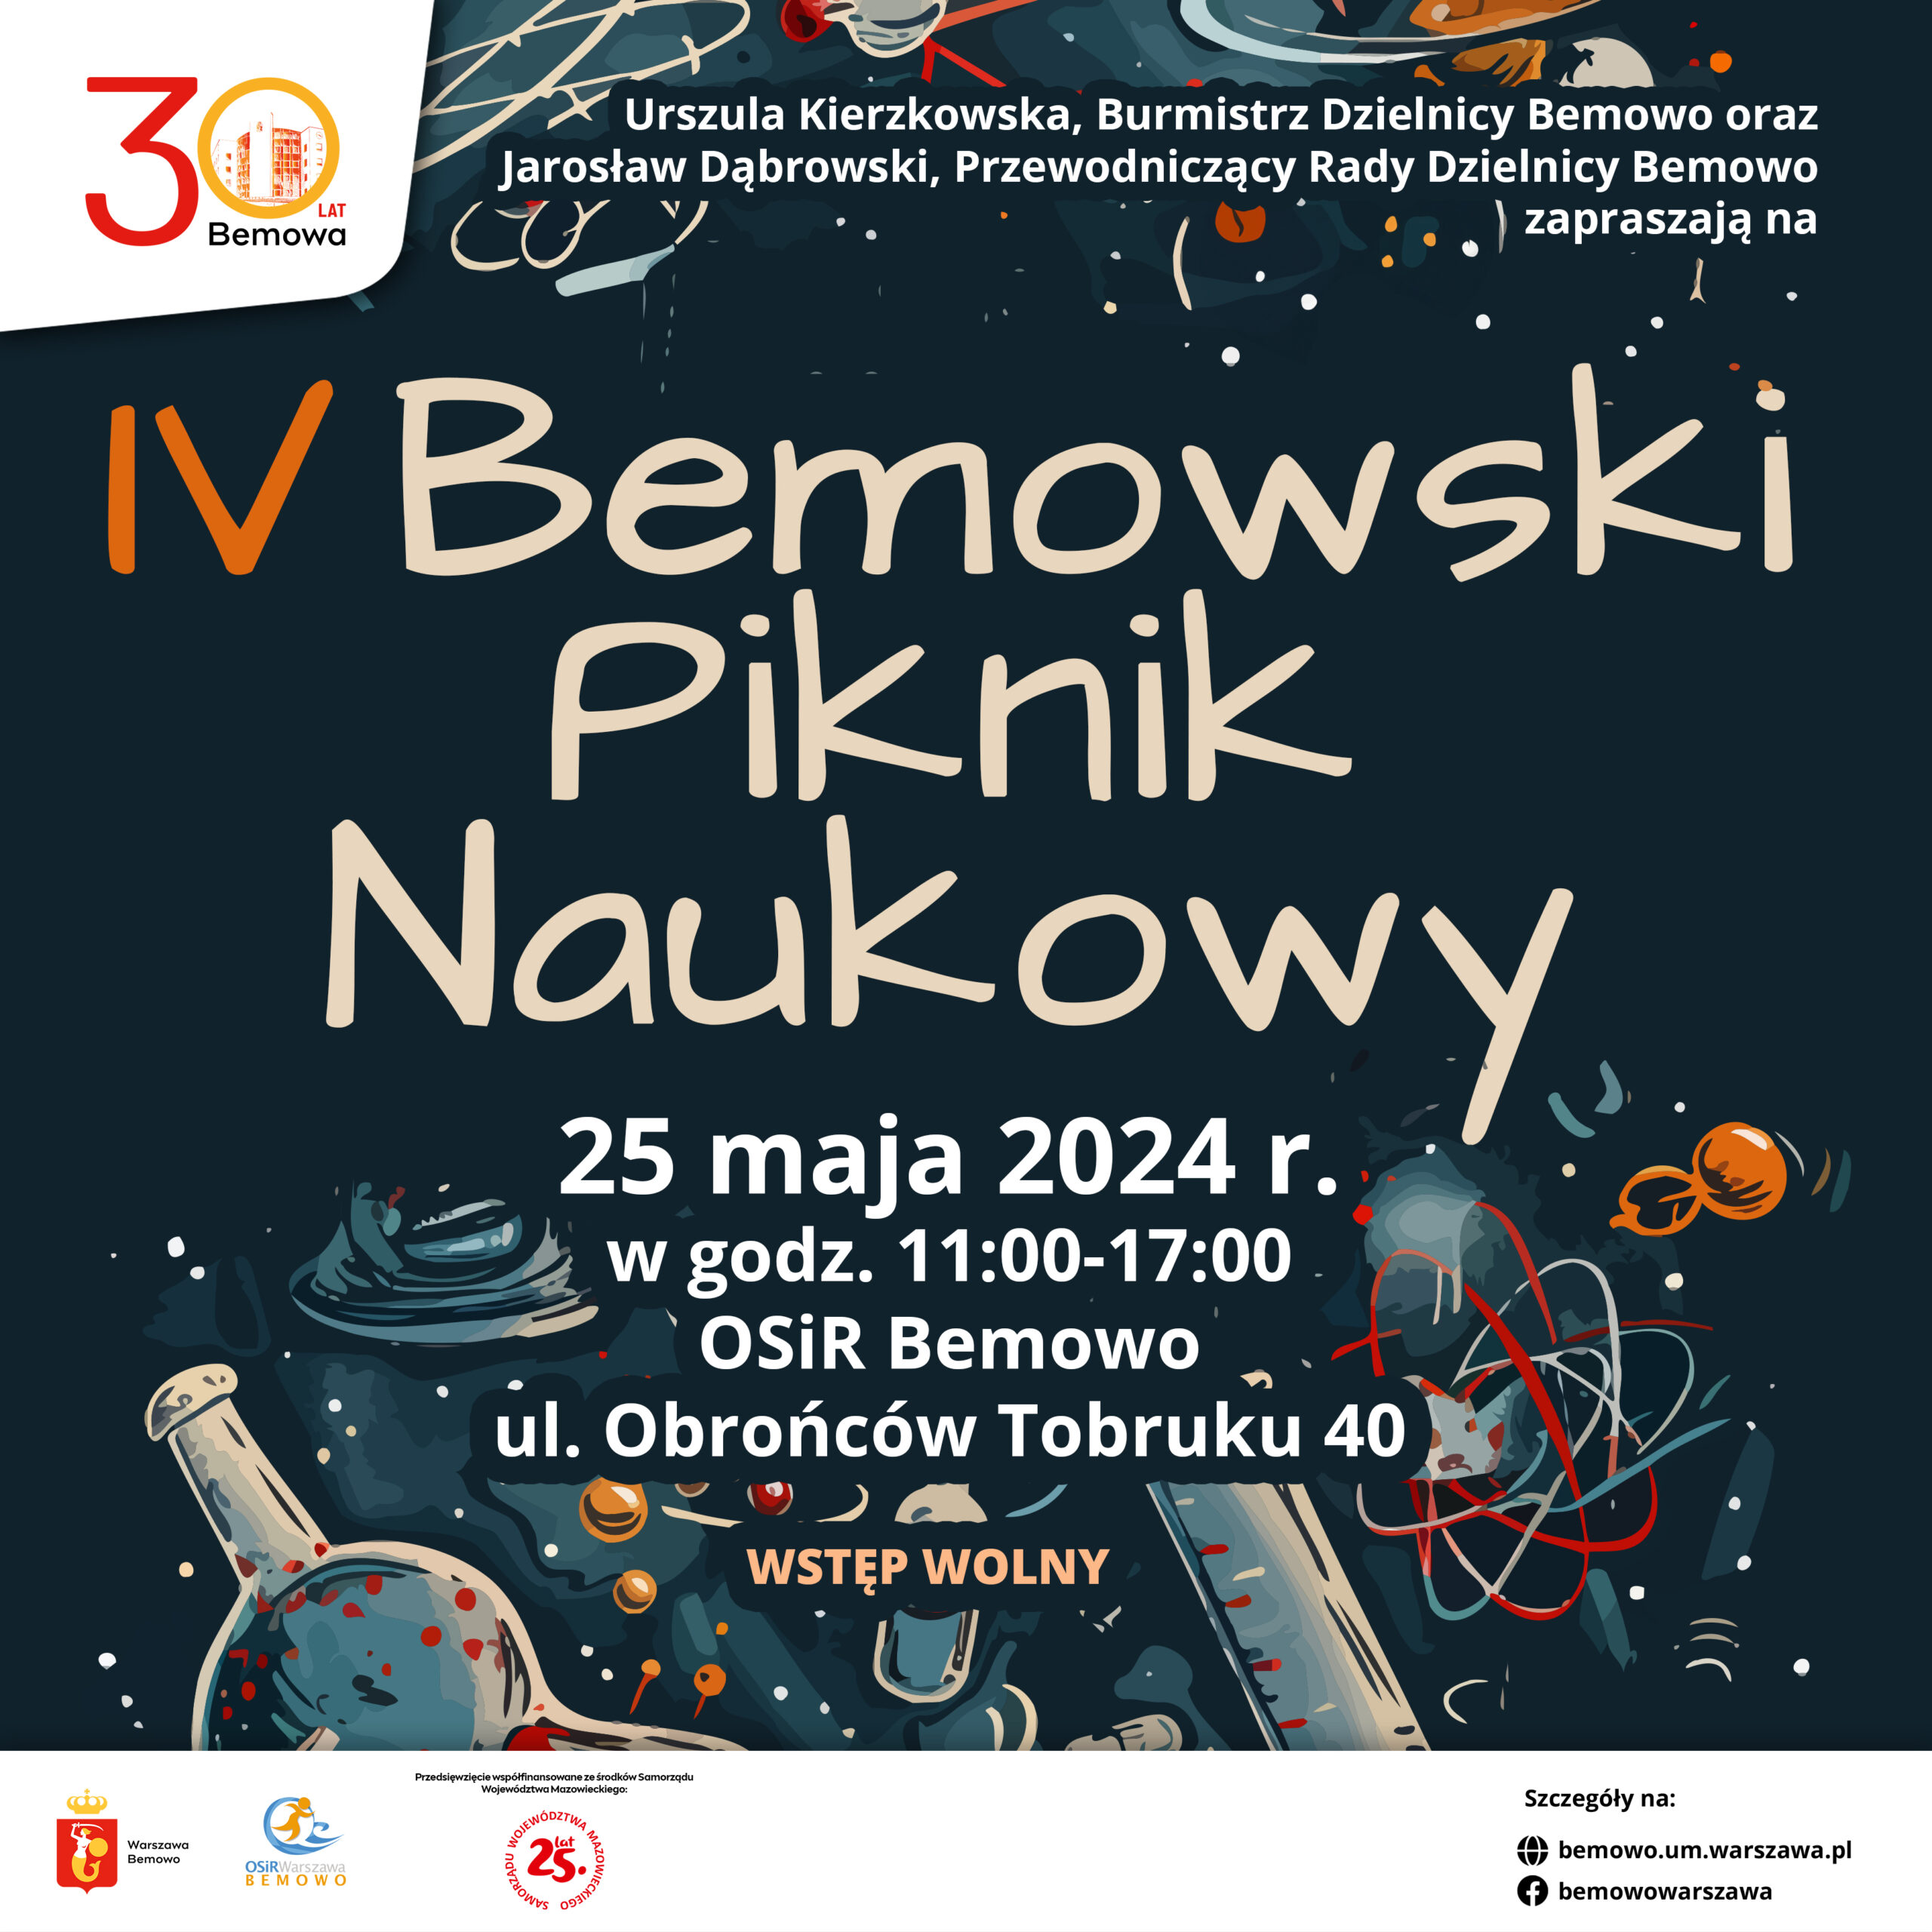 IV Bemowski Piknik Naukowy